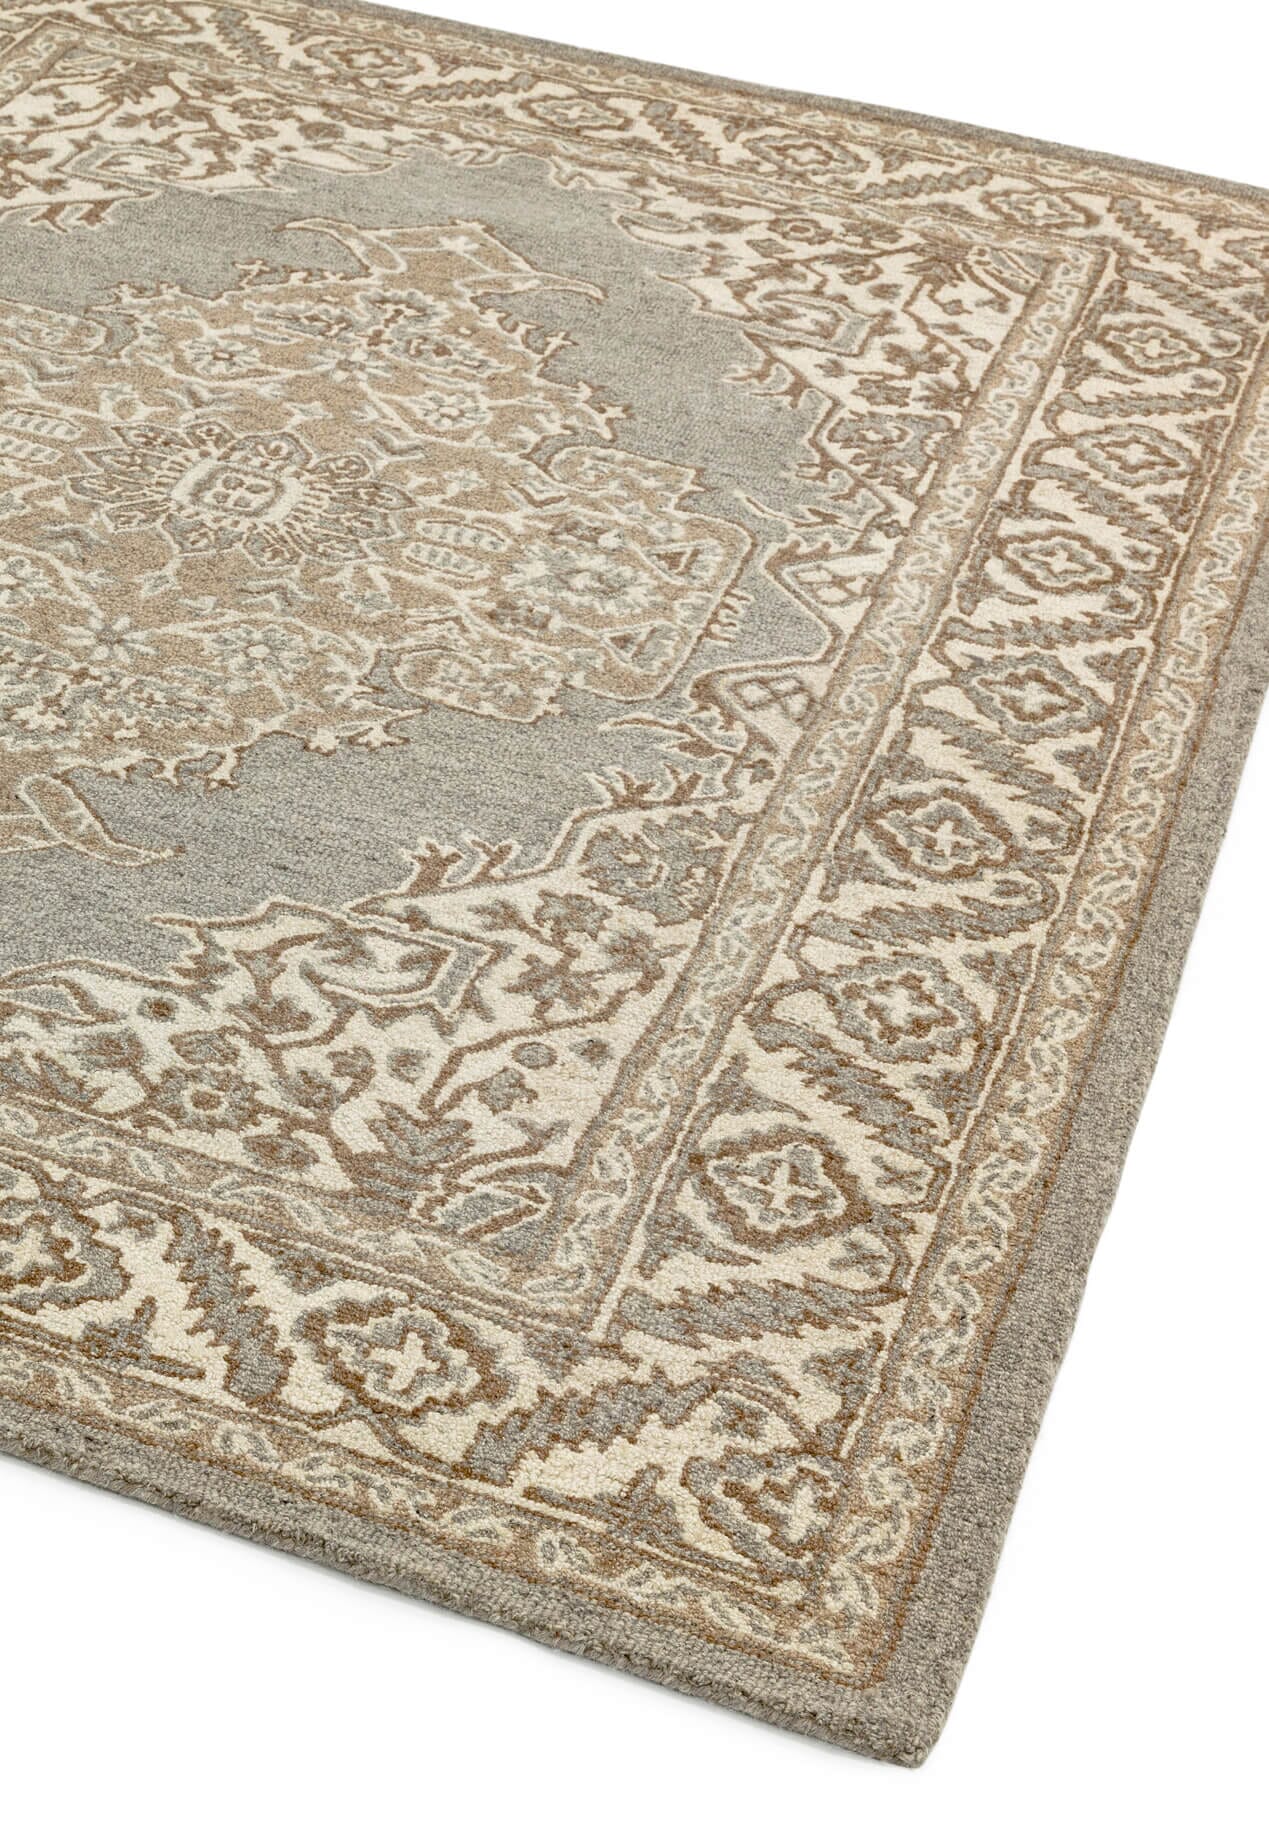  Asiatic Carpets-Asiatic Carpets Bronte Fine Loop Hand Tufted Rug Natural - 160 x 230cm-Beige, Natural 453 